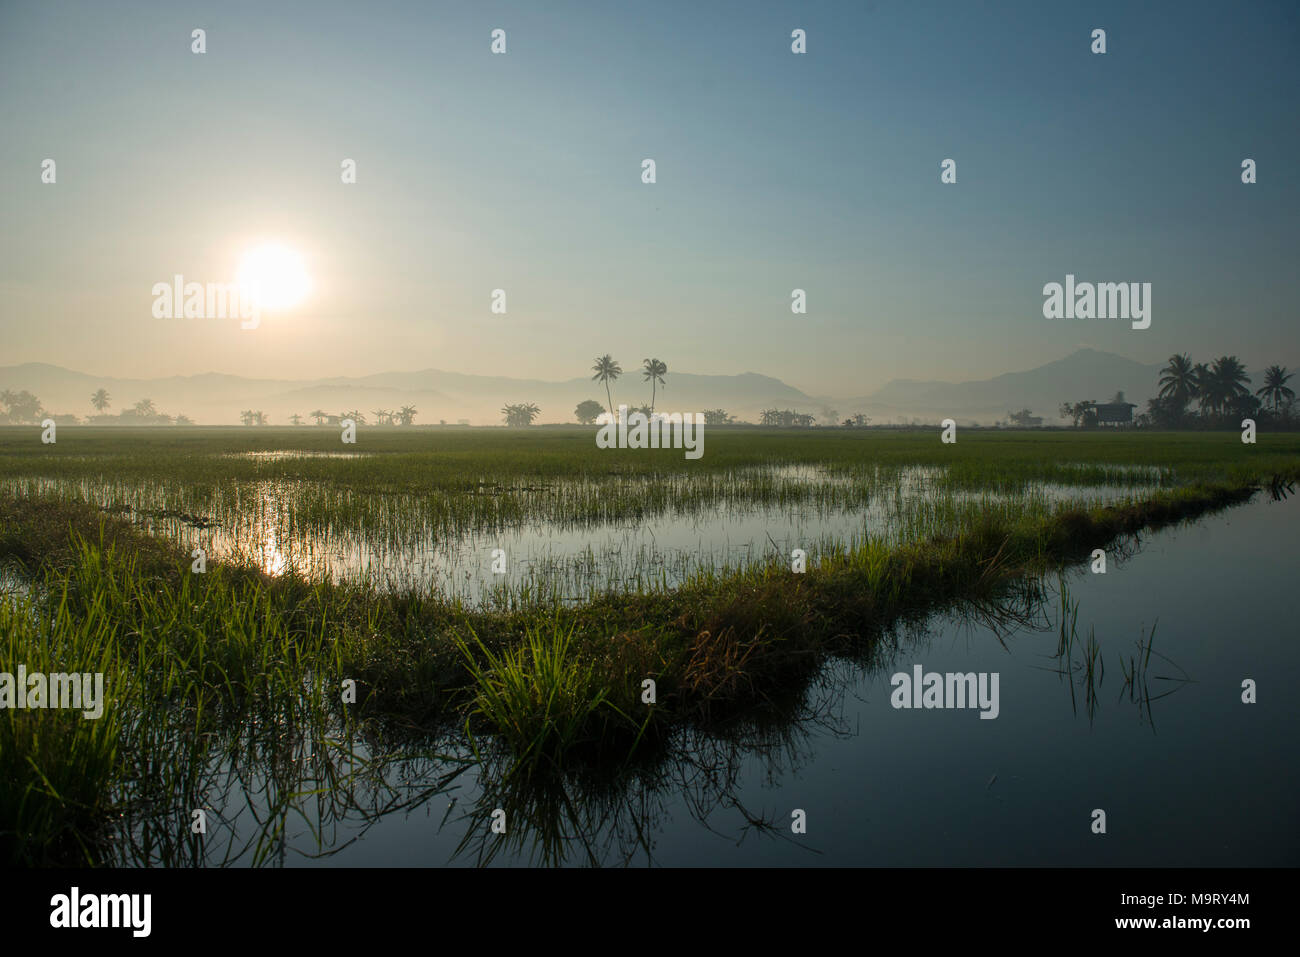 Rice paddy field, Kota Belud, Sabah, Malaysia, Borneo, Stock Photo